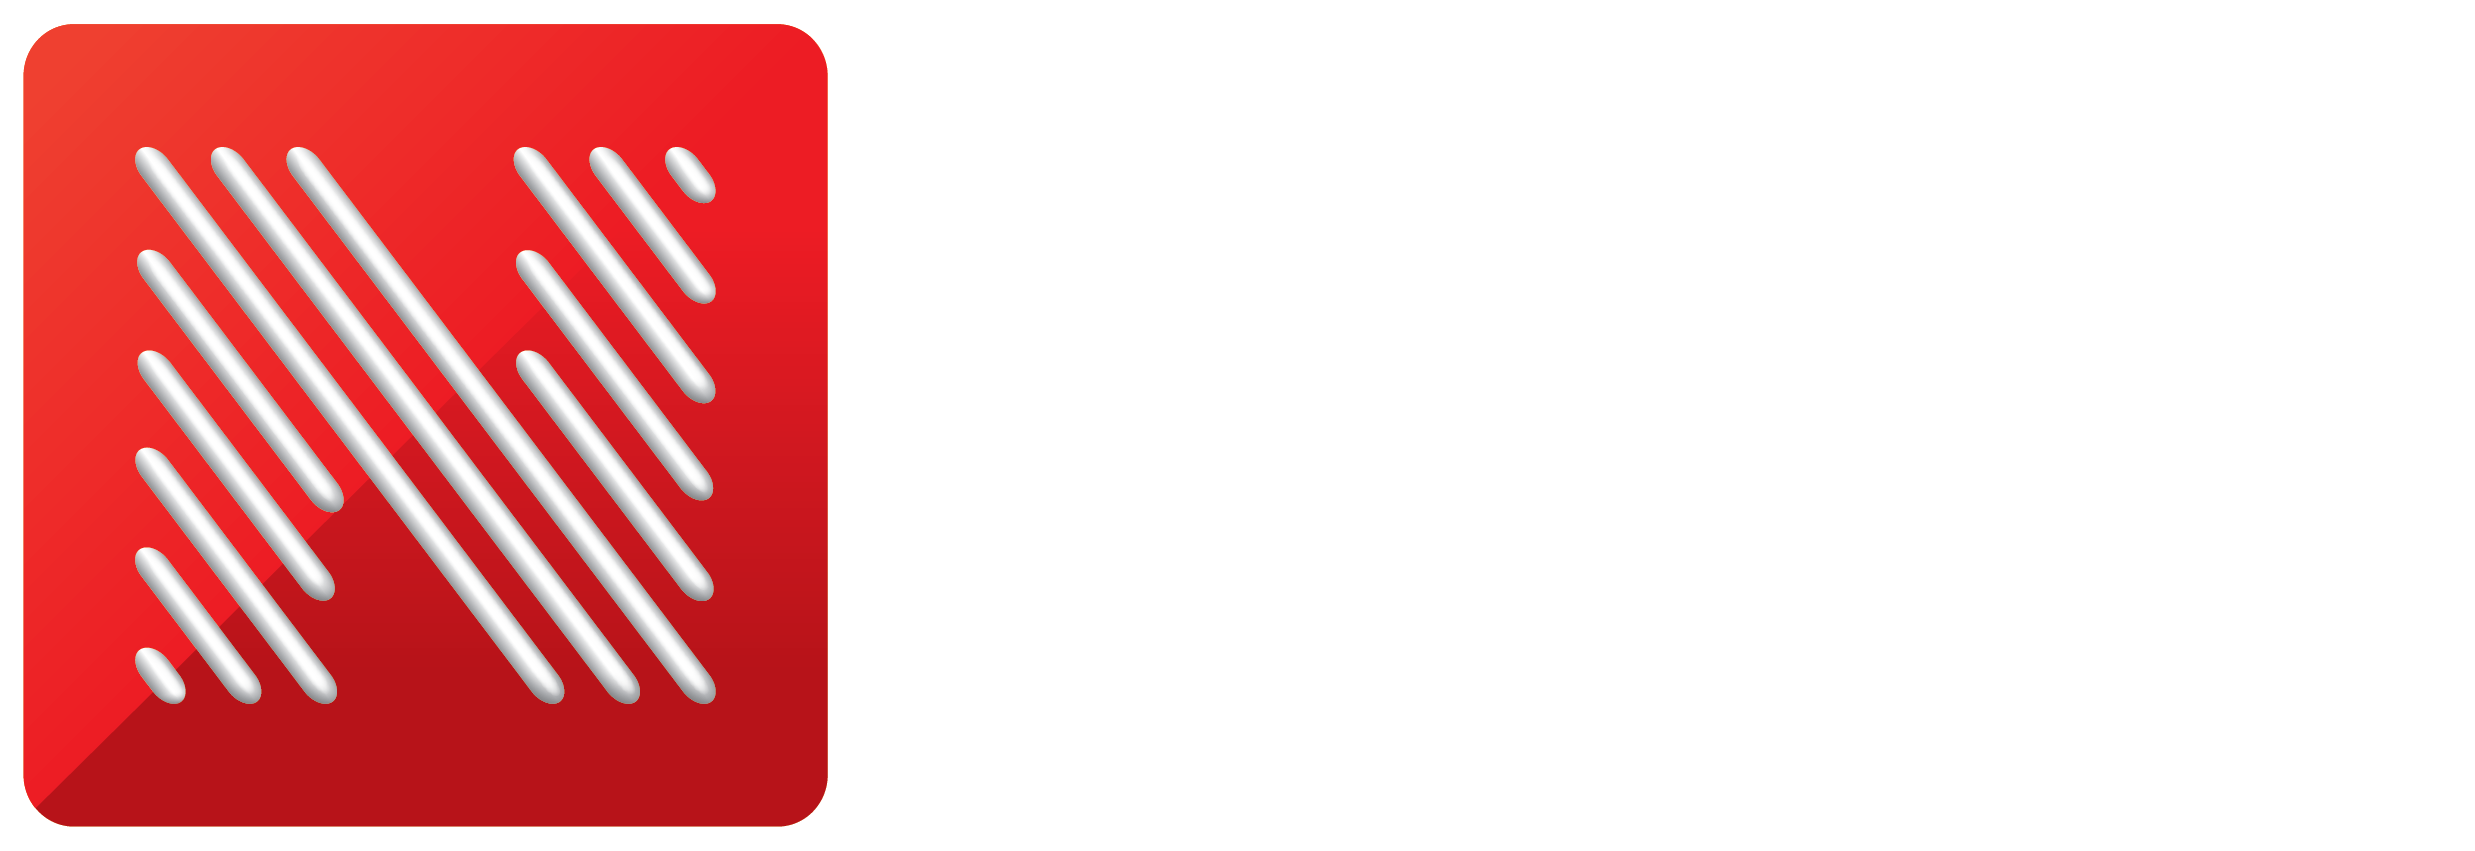 NOVA Entertainment